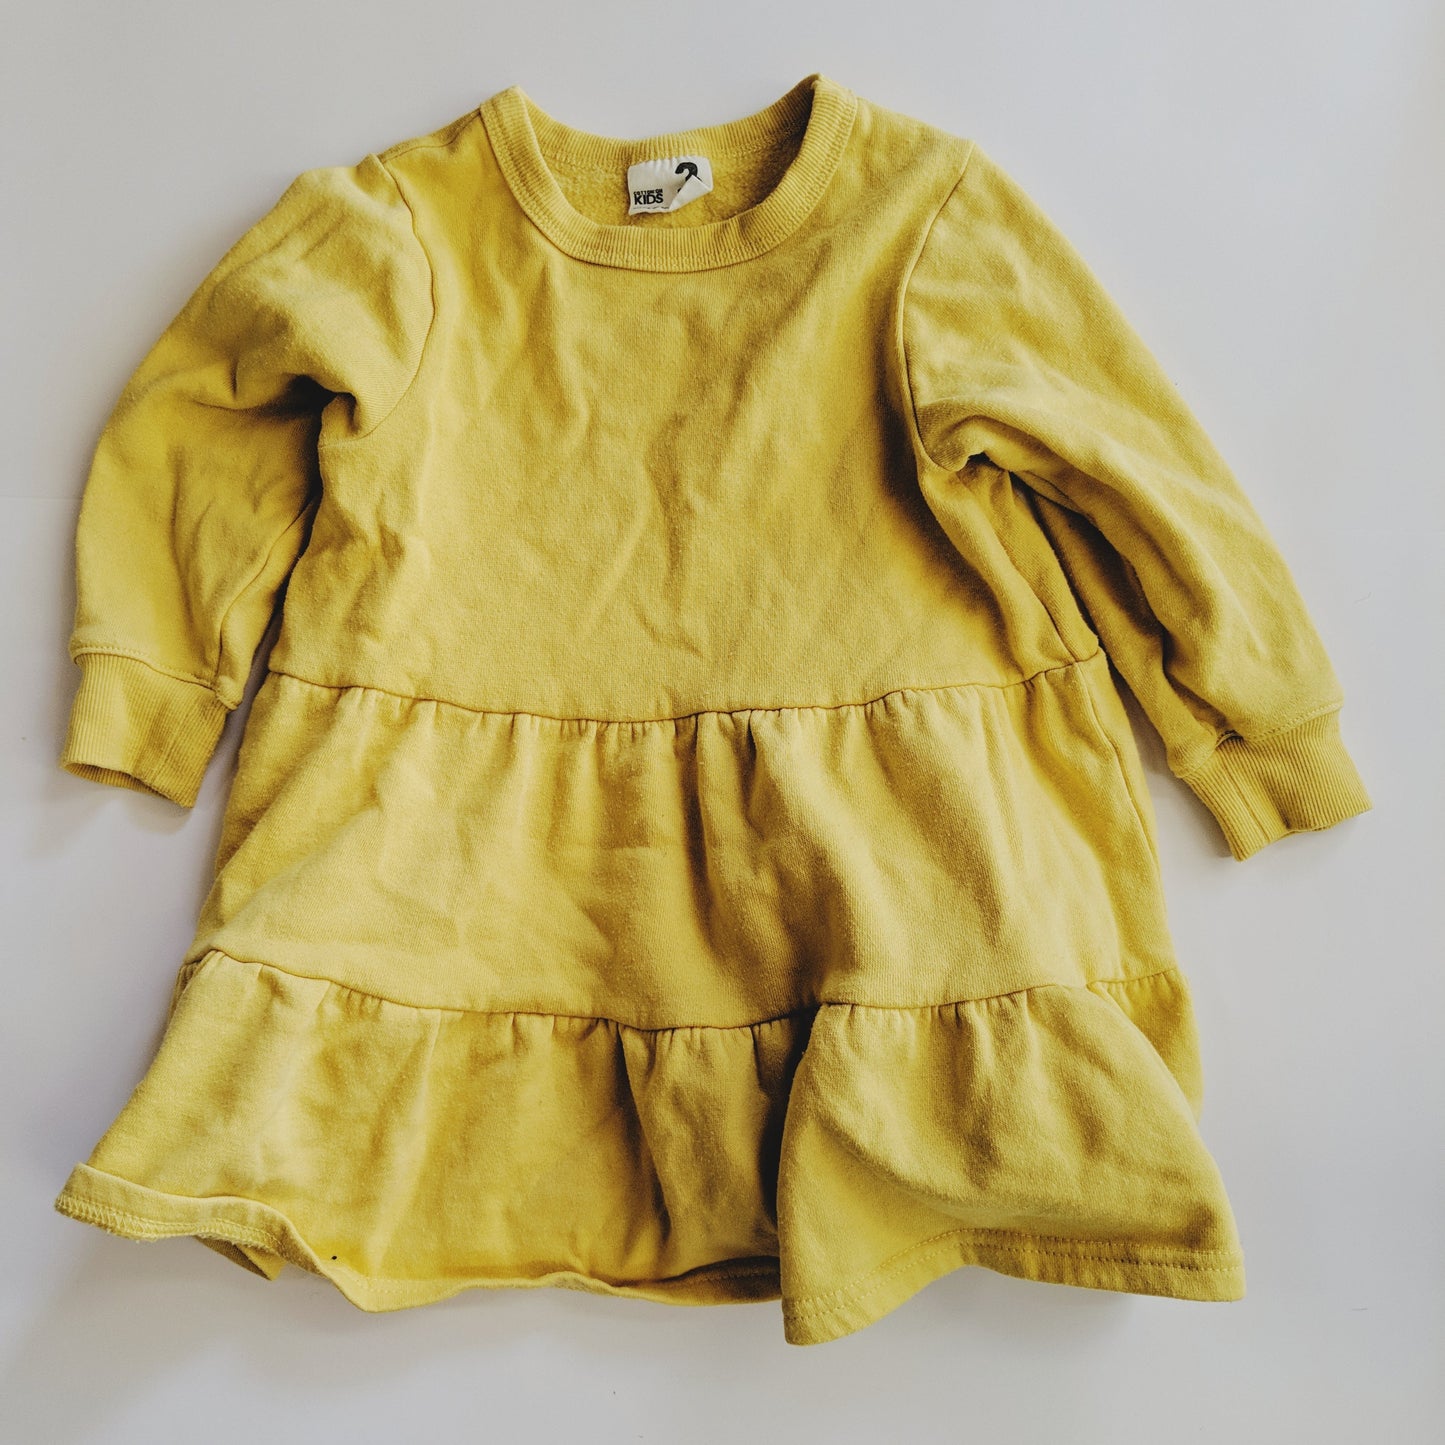 Yellow jumper dress - size 3